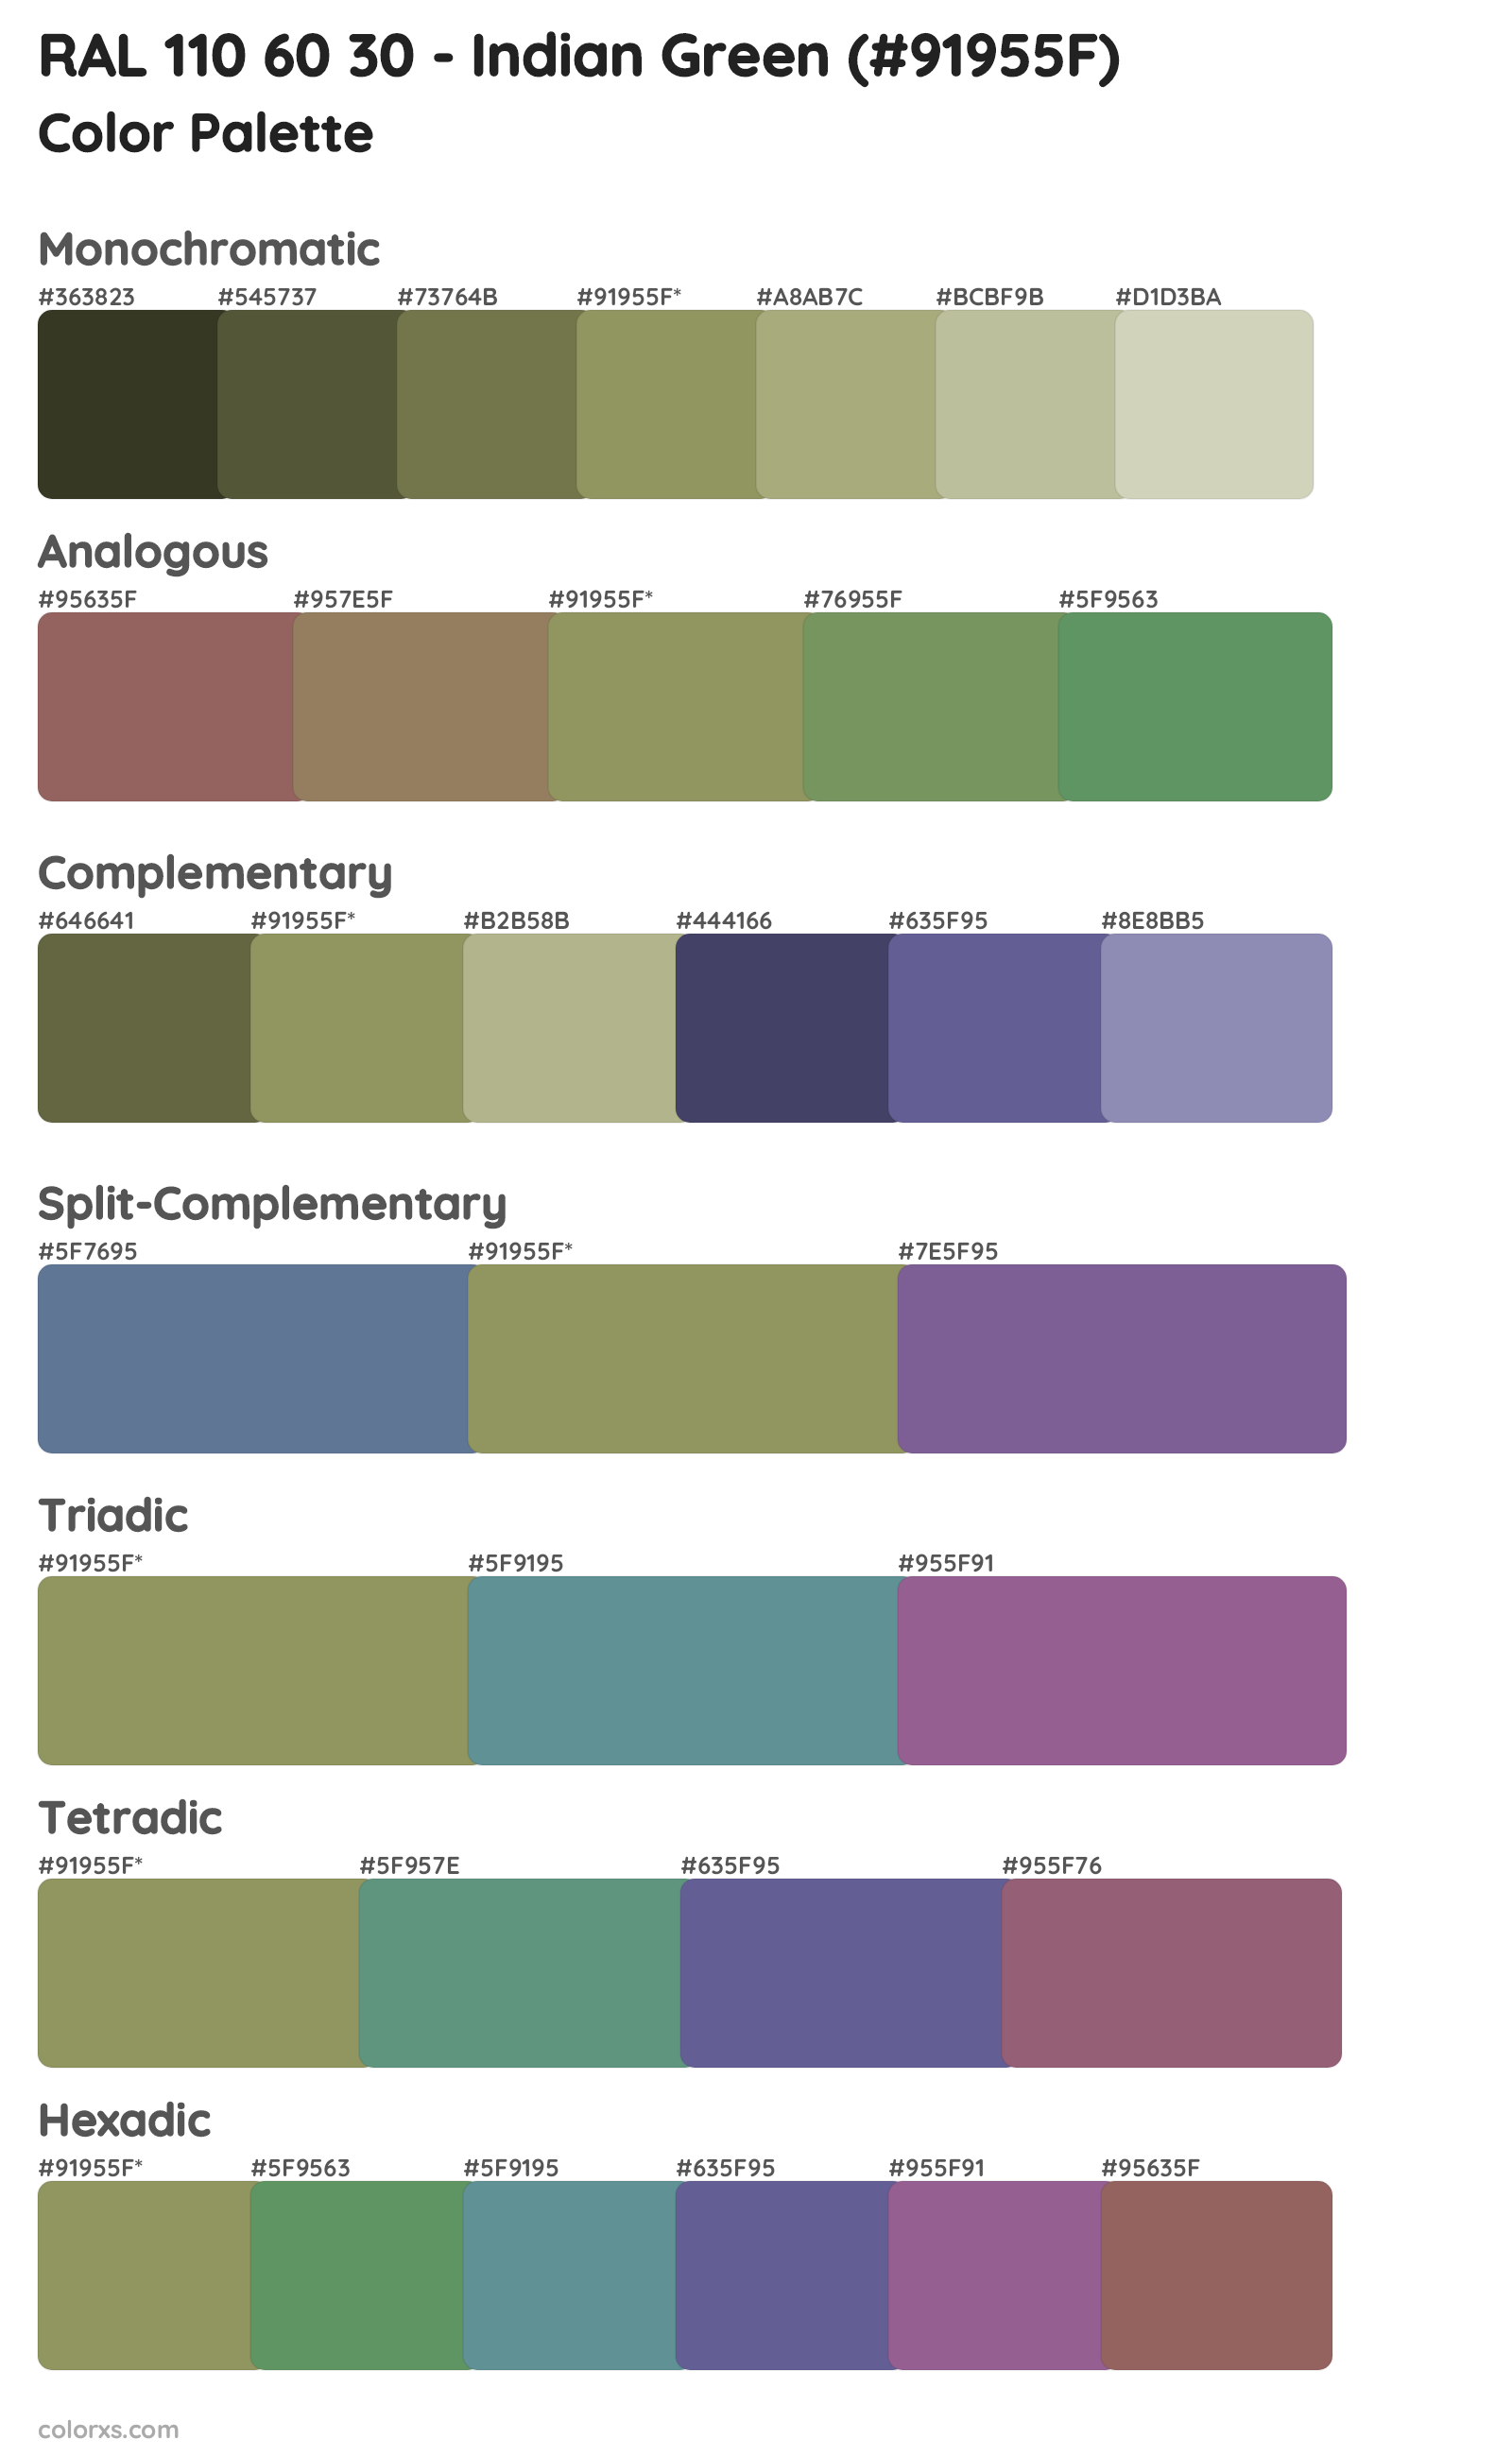 RAL 110 60 30 - Indian Green Color Scheme Palettes